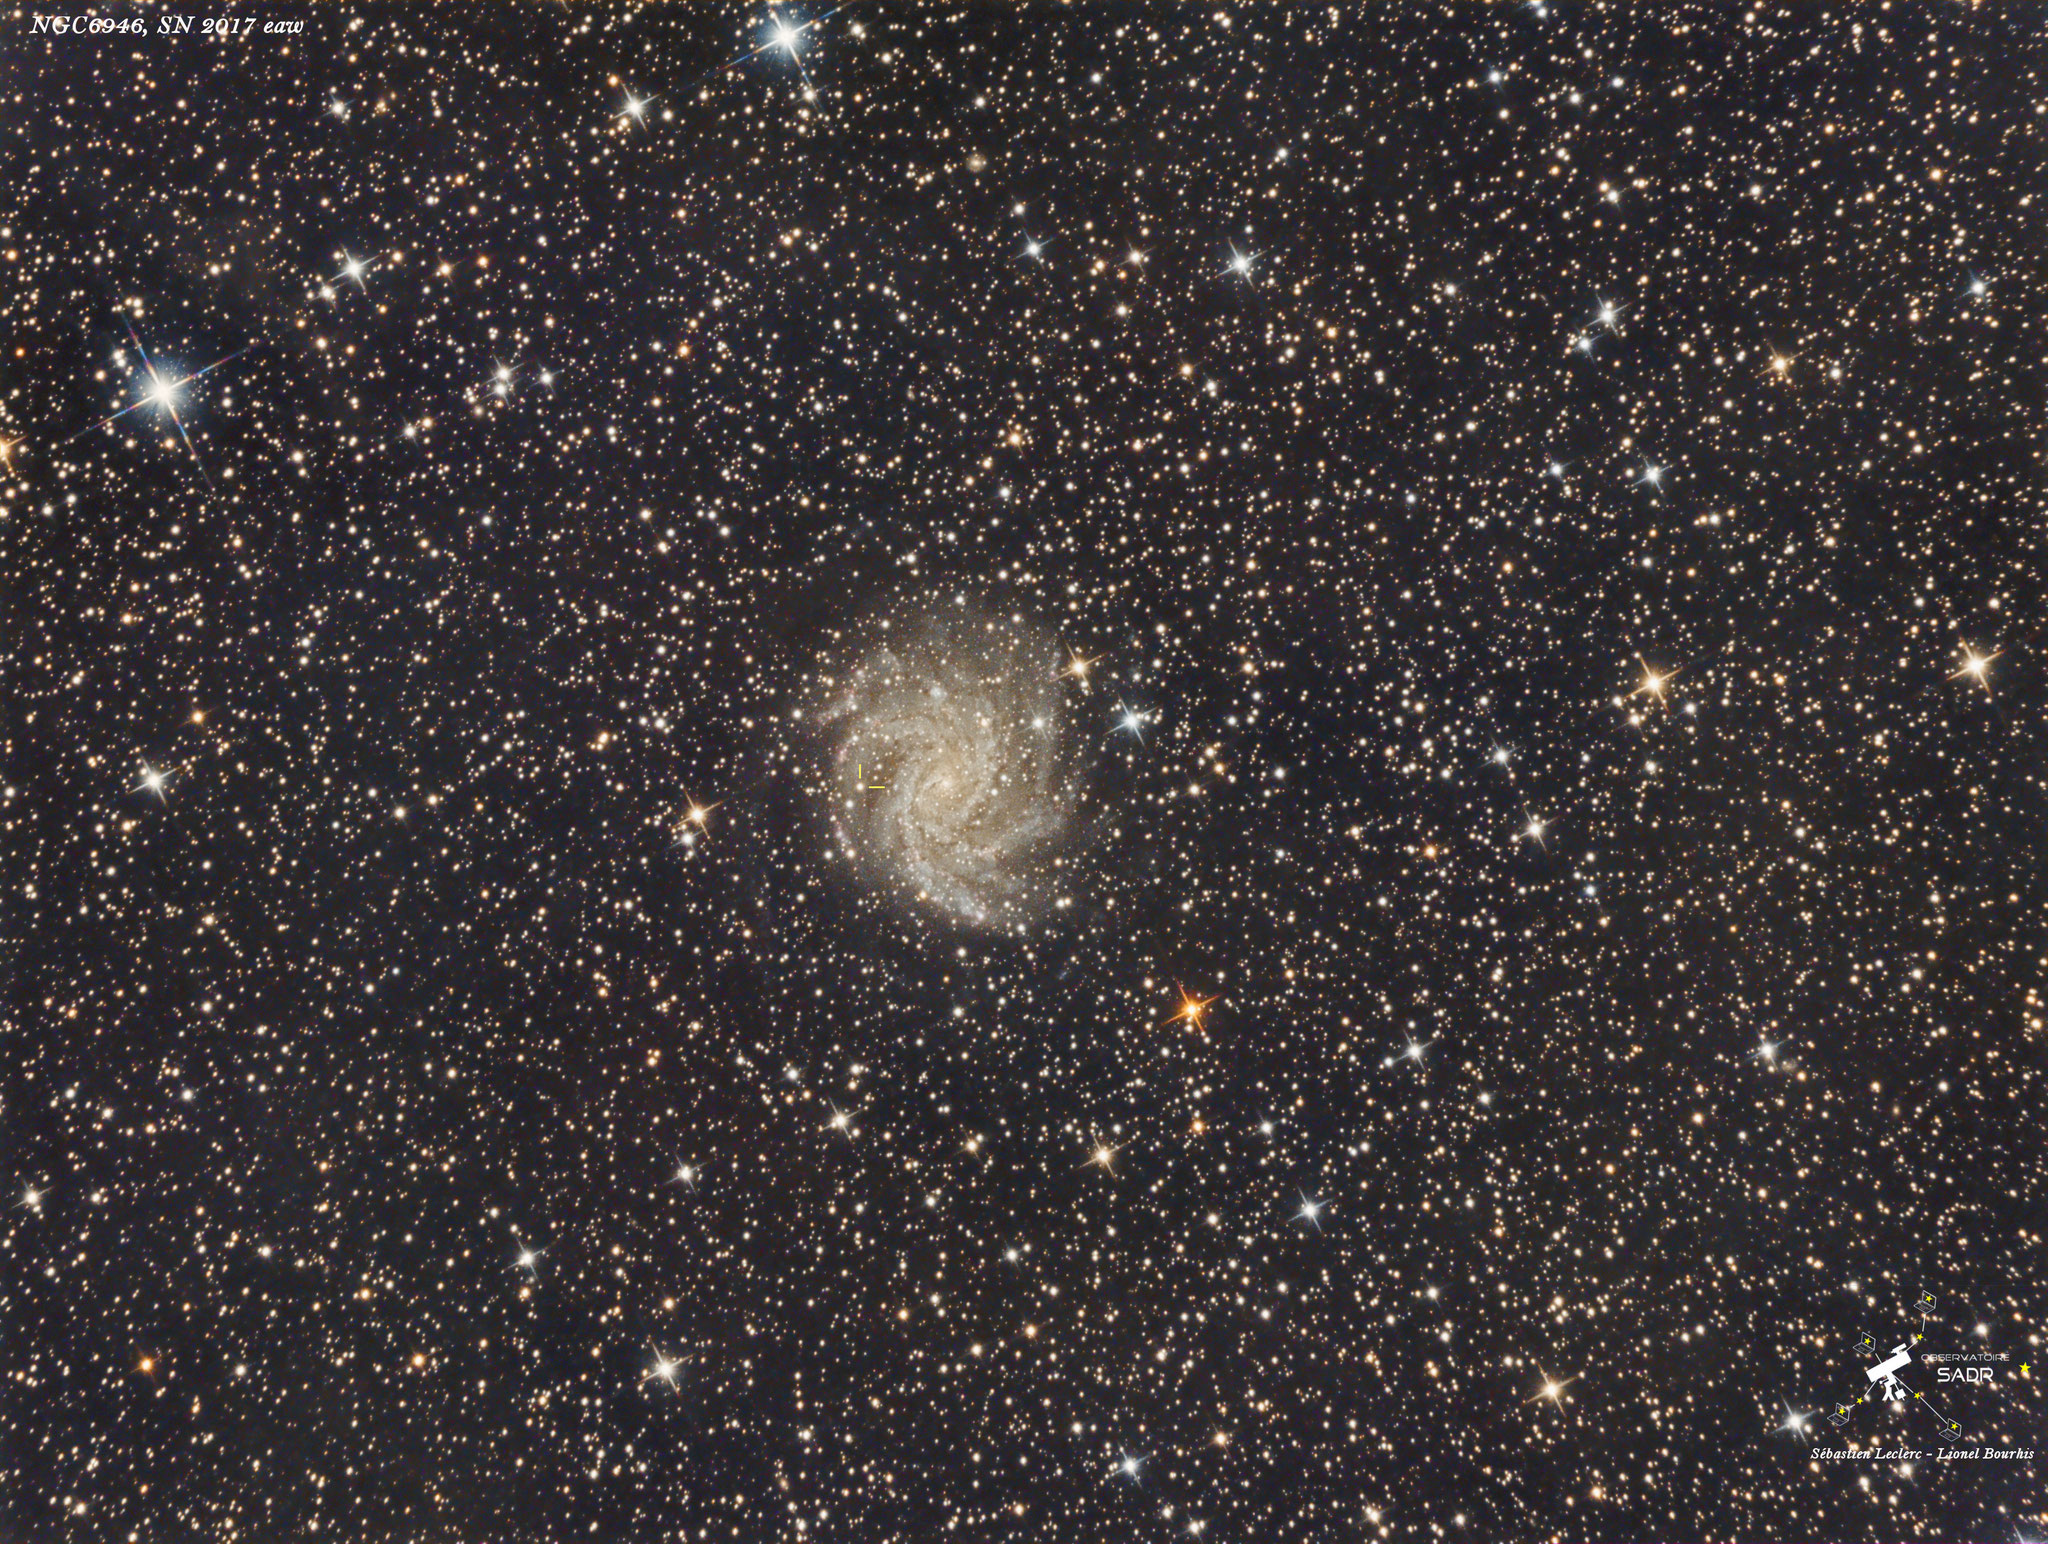 NGC6946 et SN2017eaw, L (24x5min), RVB (7x3min), 21 juillet, Sébastien-Lionel